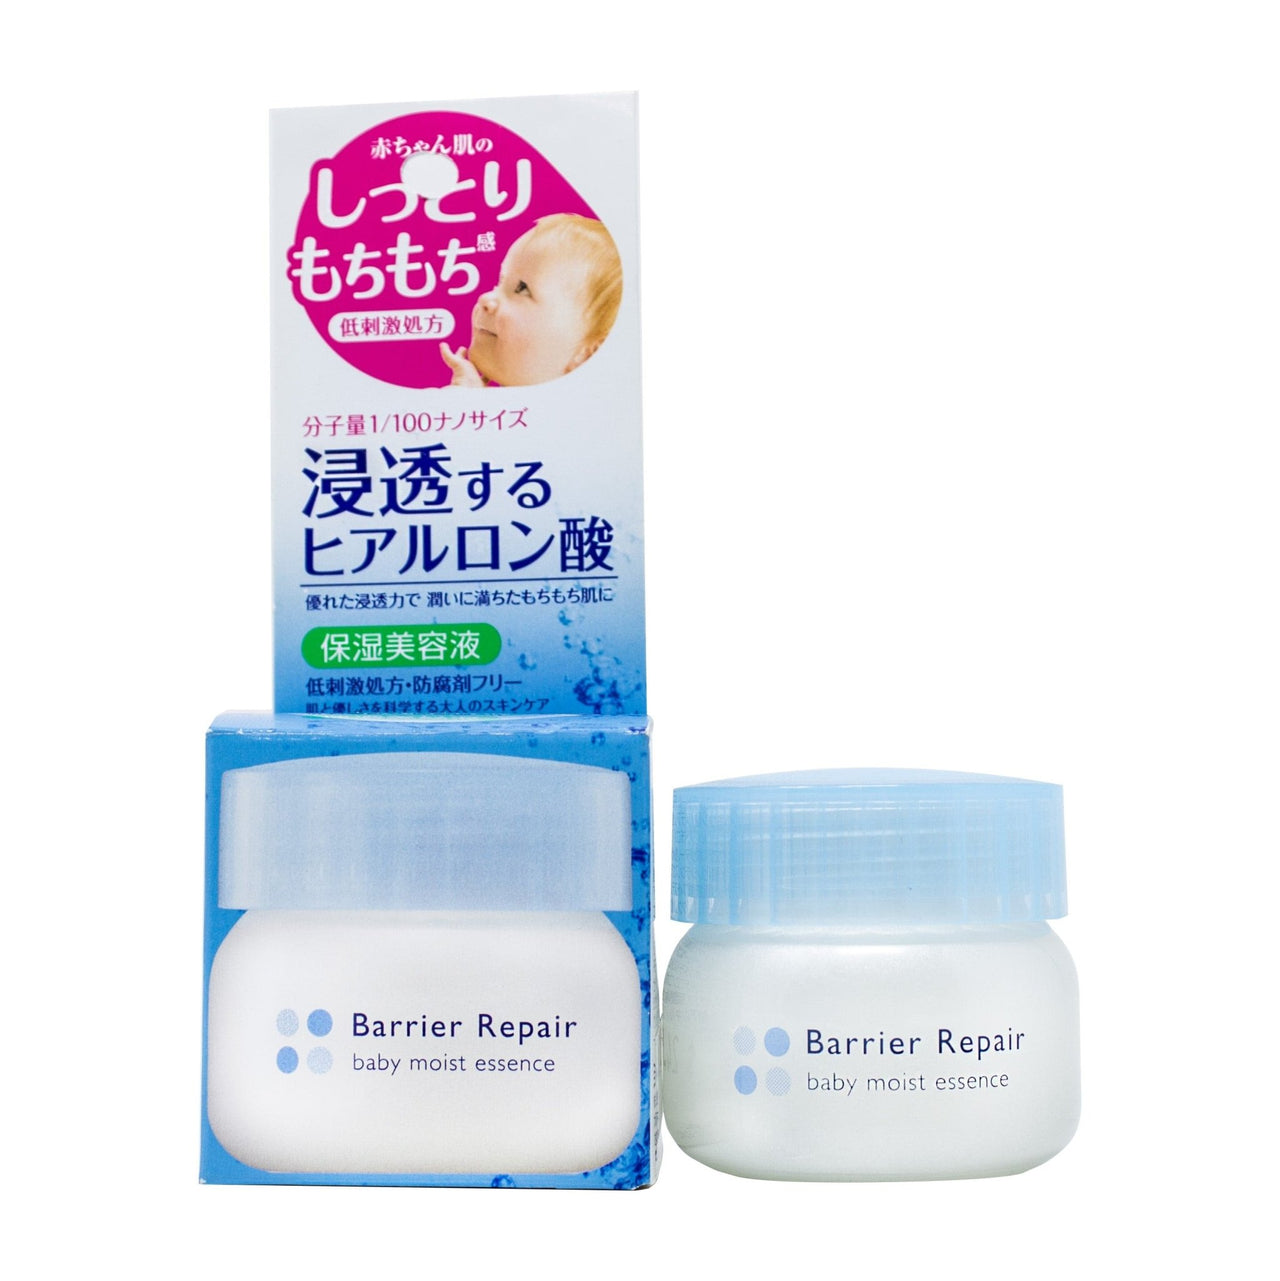 MANDOM BEAUTY_Barrier Repair baby moist essence 40g_Cosmetic World